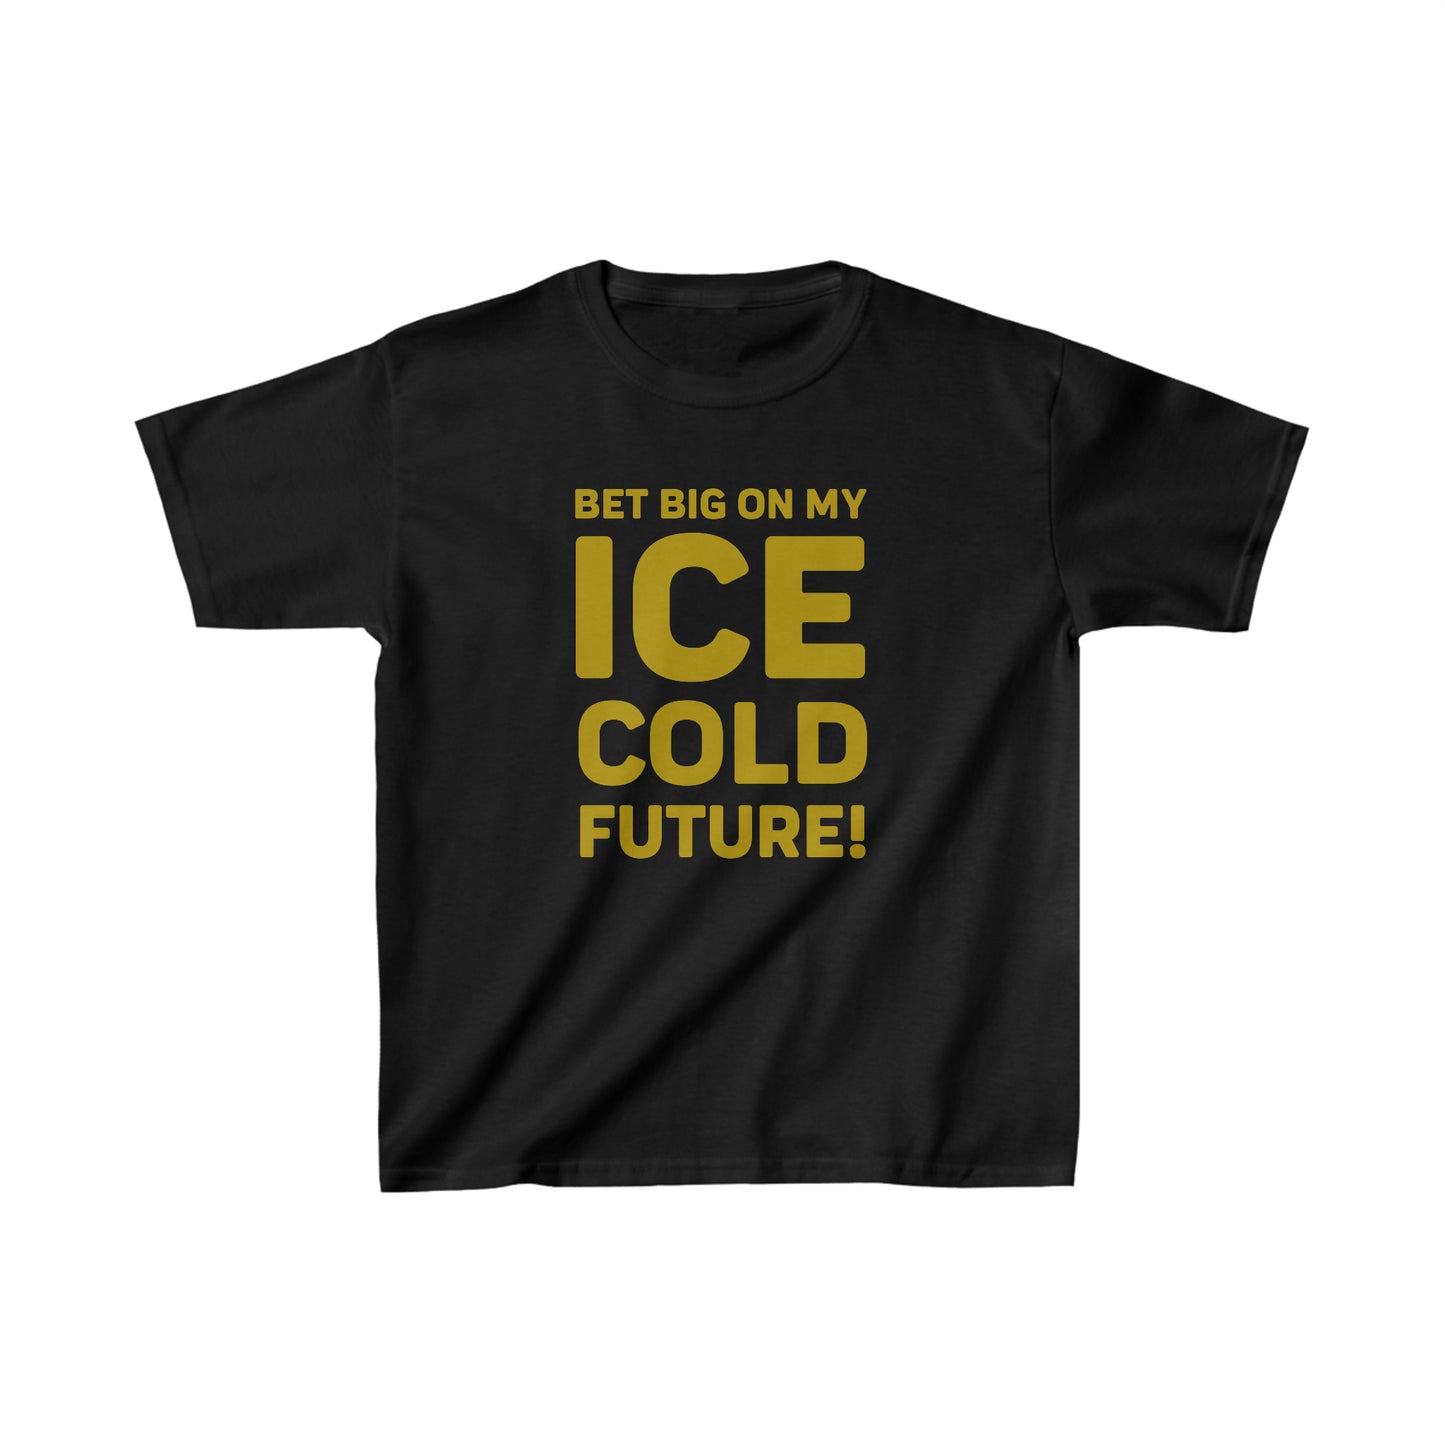 Bet Big on my Ice Cold Future!